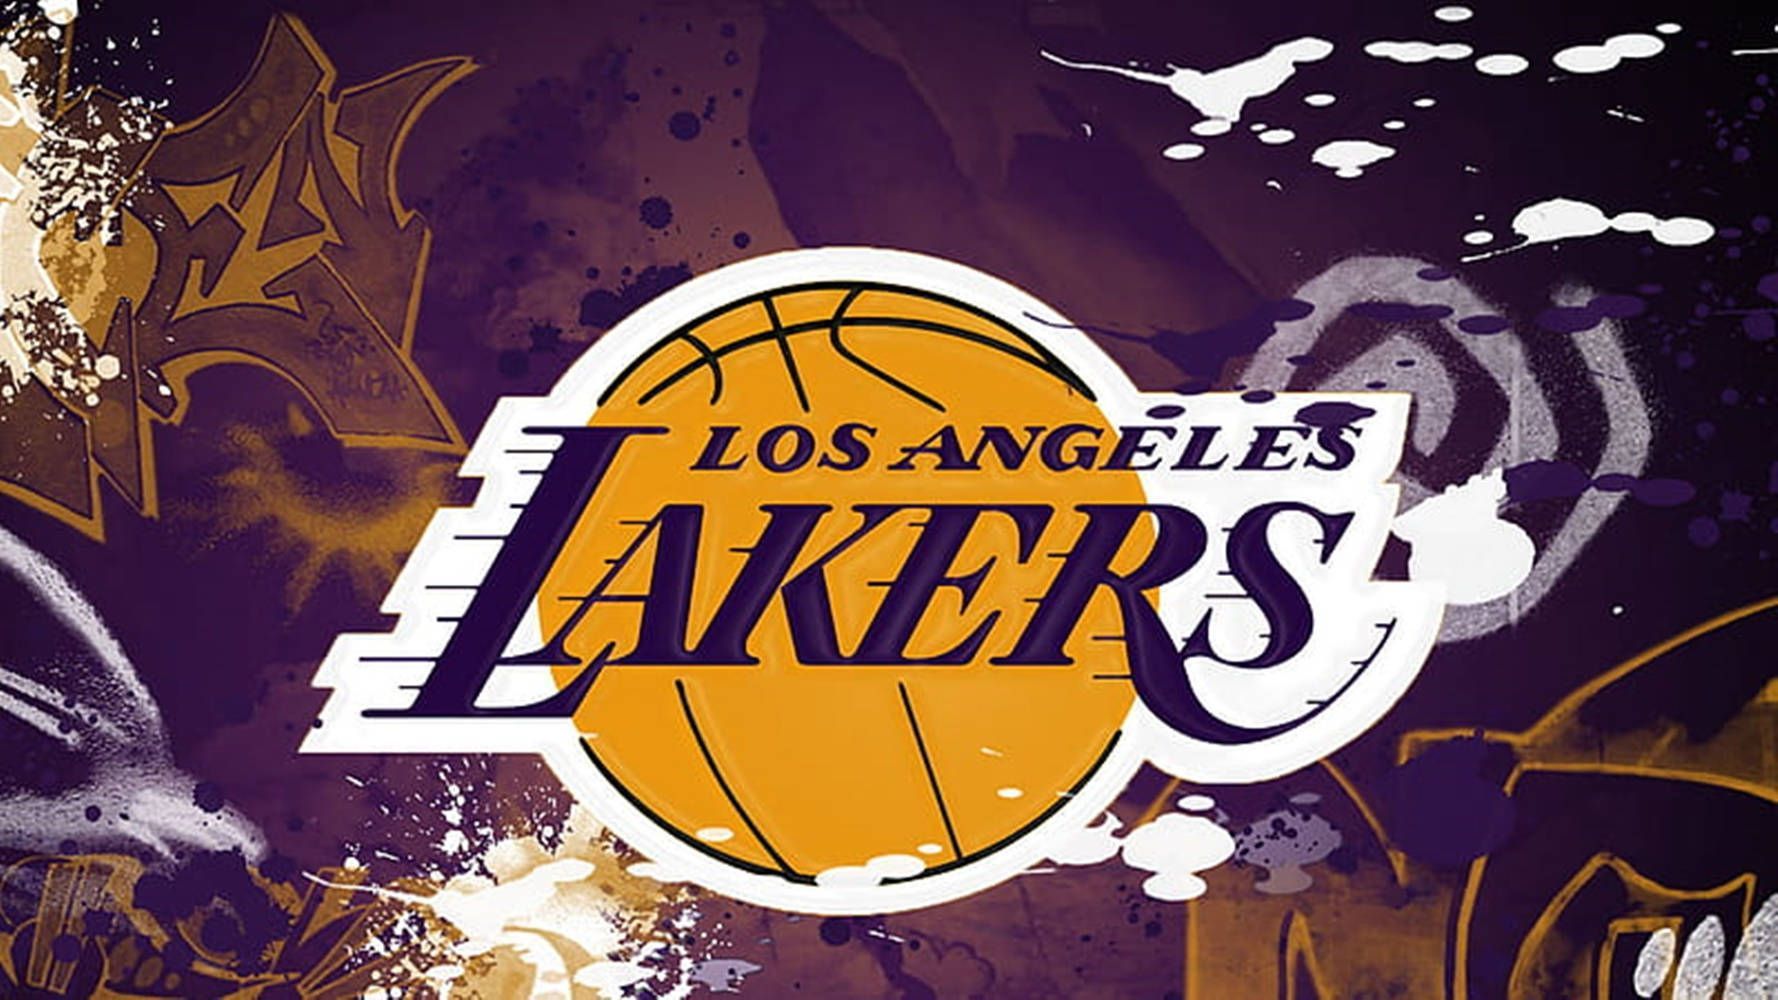 Los Angeles Lakers wallpaper 1024x768 Lakers wallpaper 1024x768 1024x768 - Los Angeles Lakers